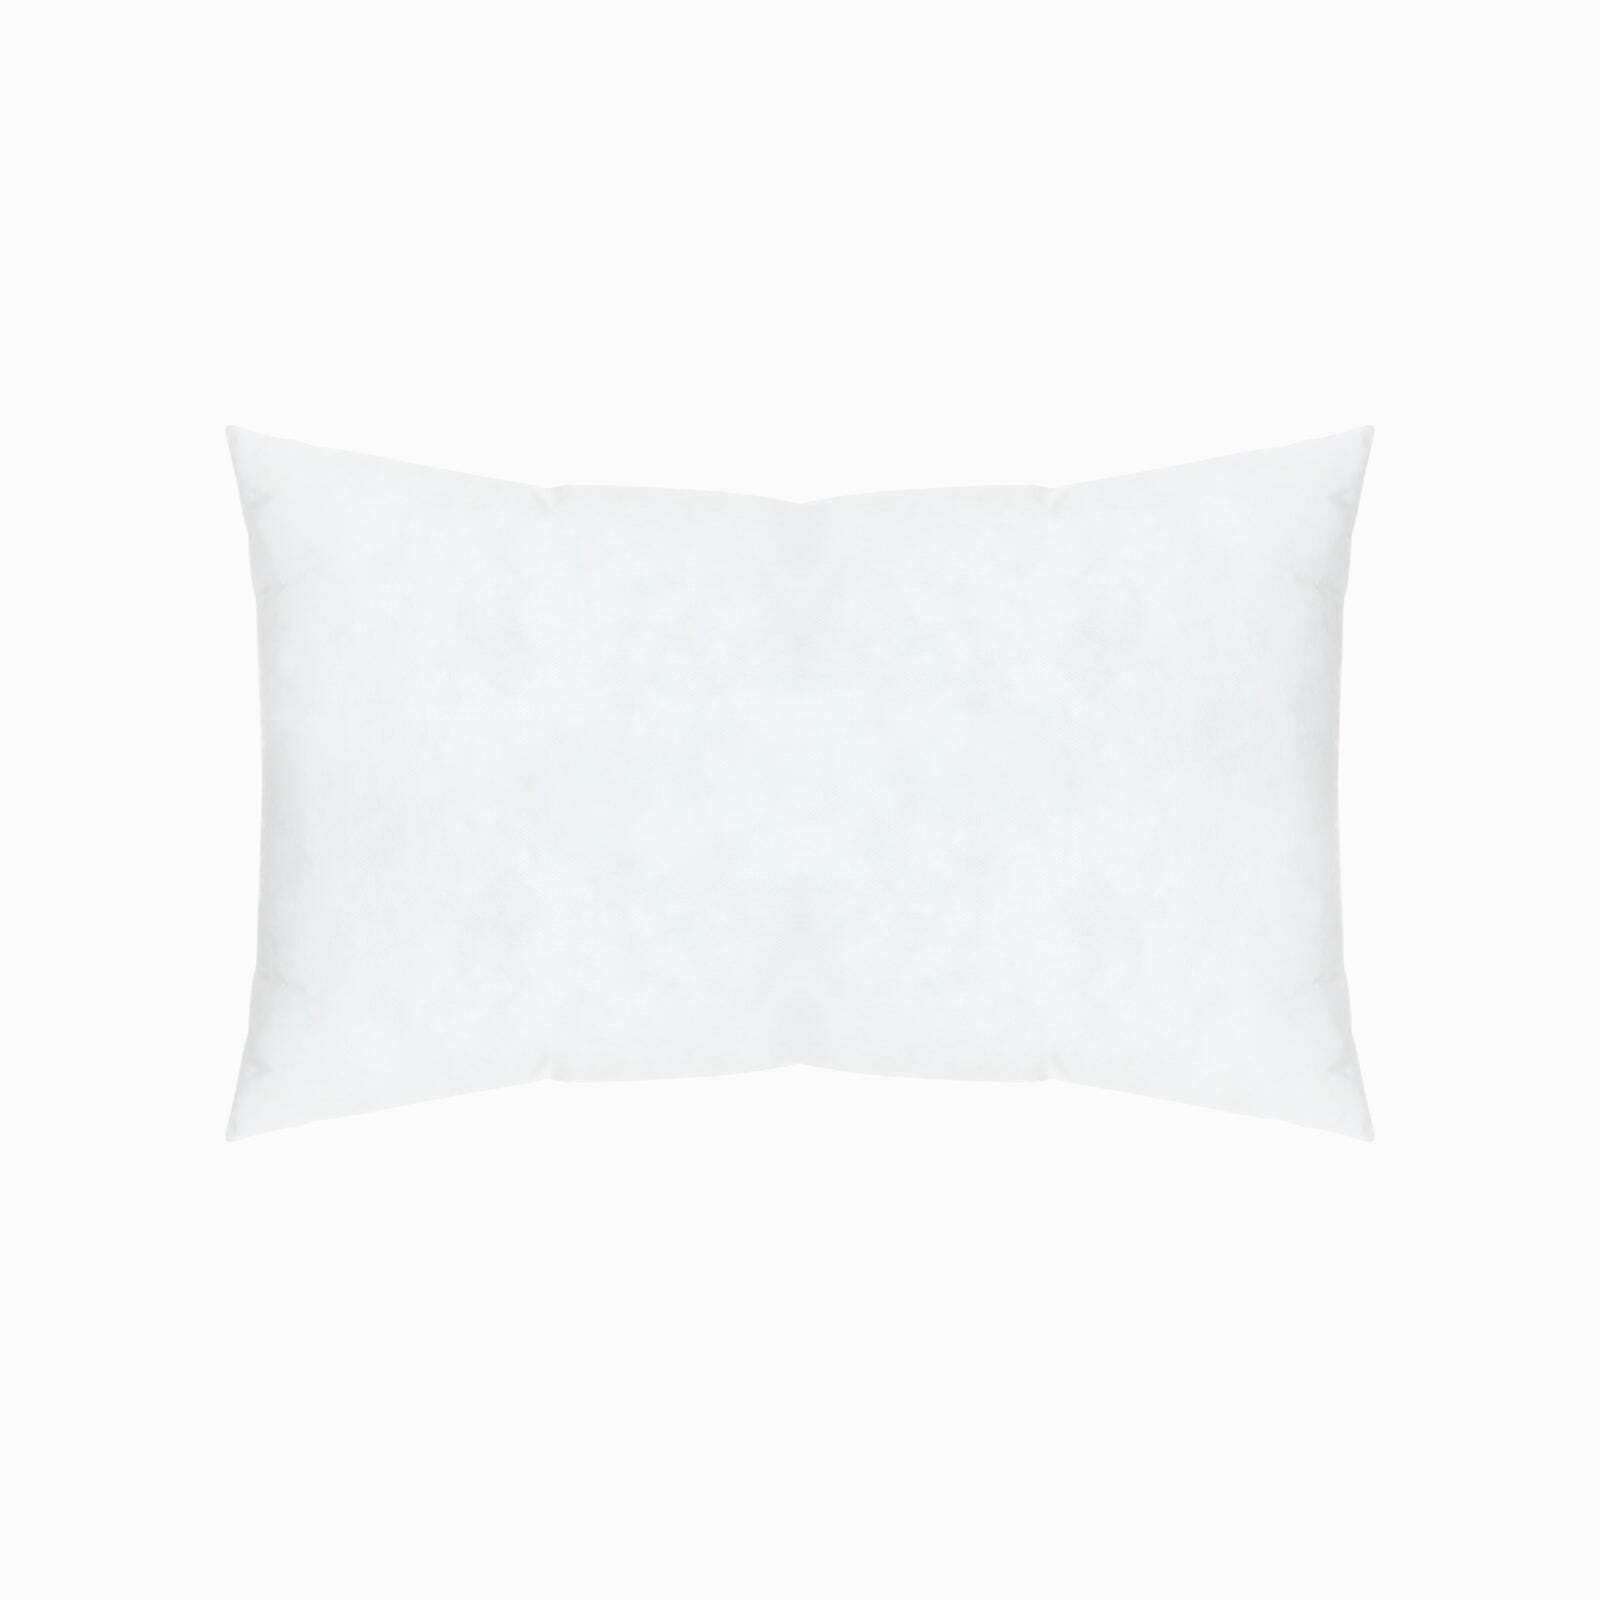 Large Rectangular Cushion Pad, White, 40x60 cm